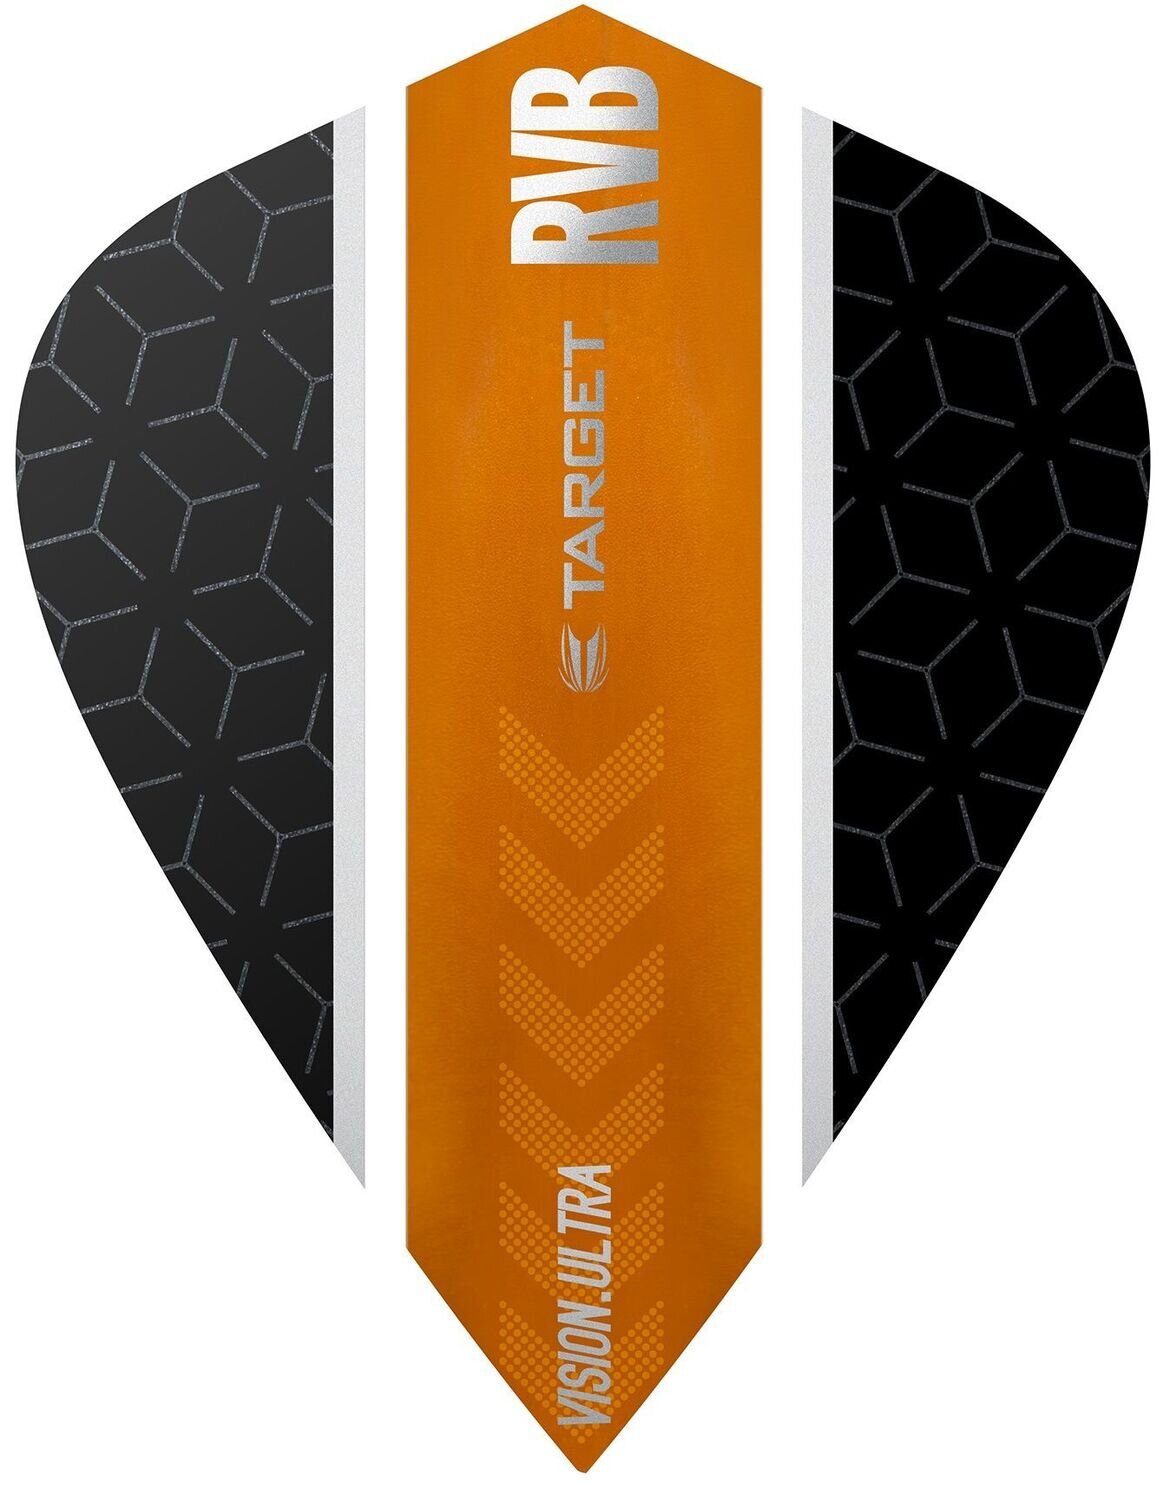 Vision Ultra Player RVB Stripe Kite